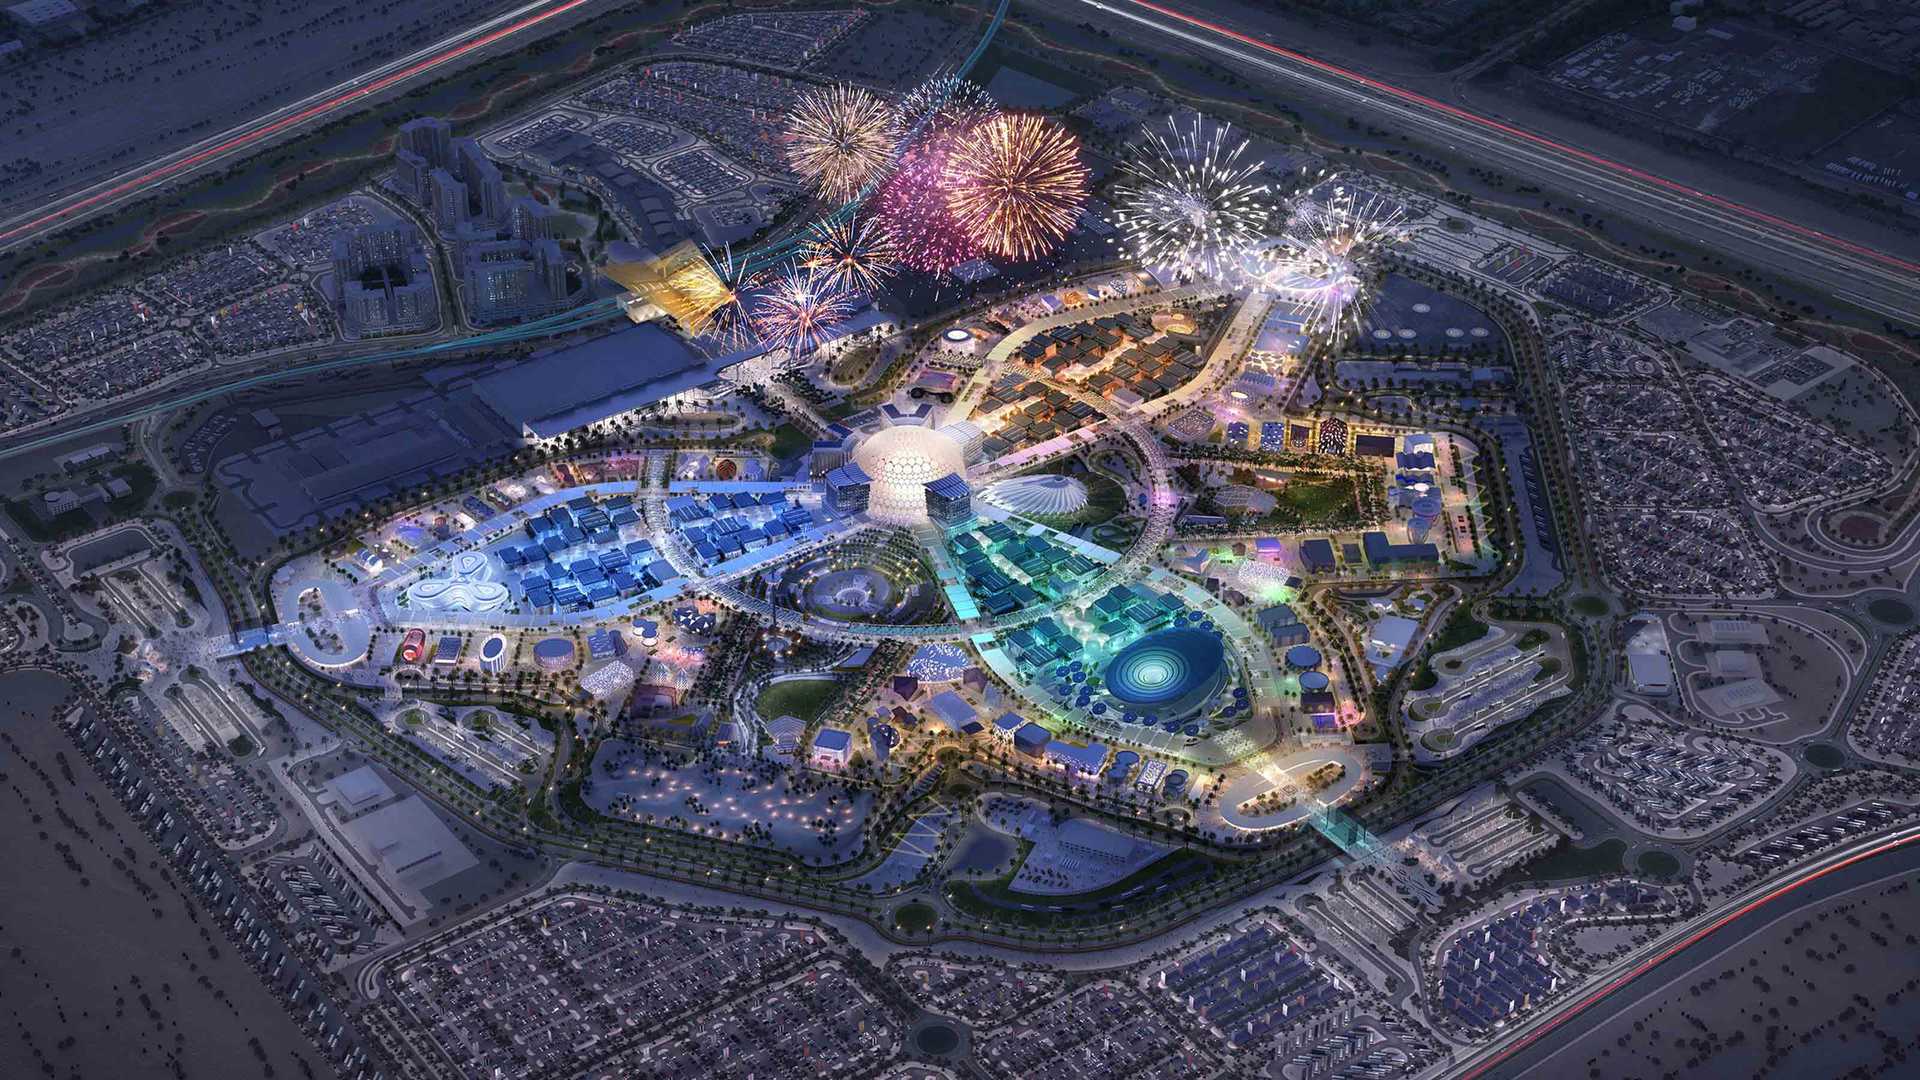 Dubai Expo 2020: Top 15 things to do (activities, dining